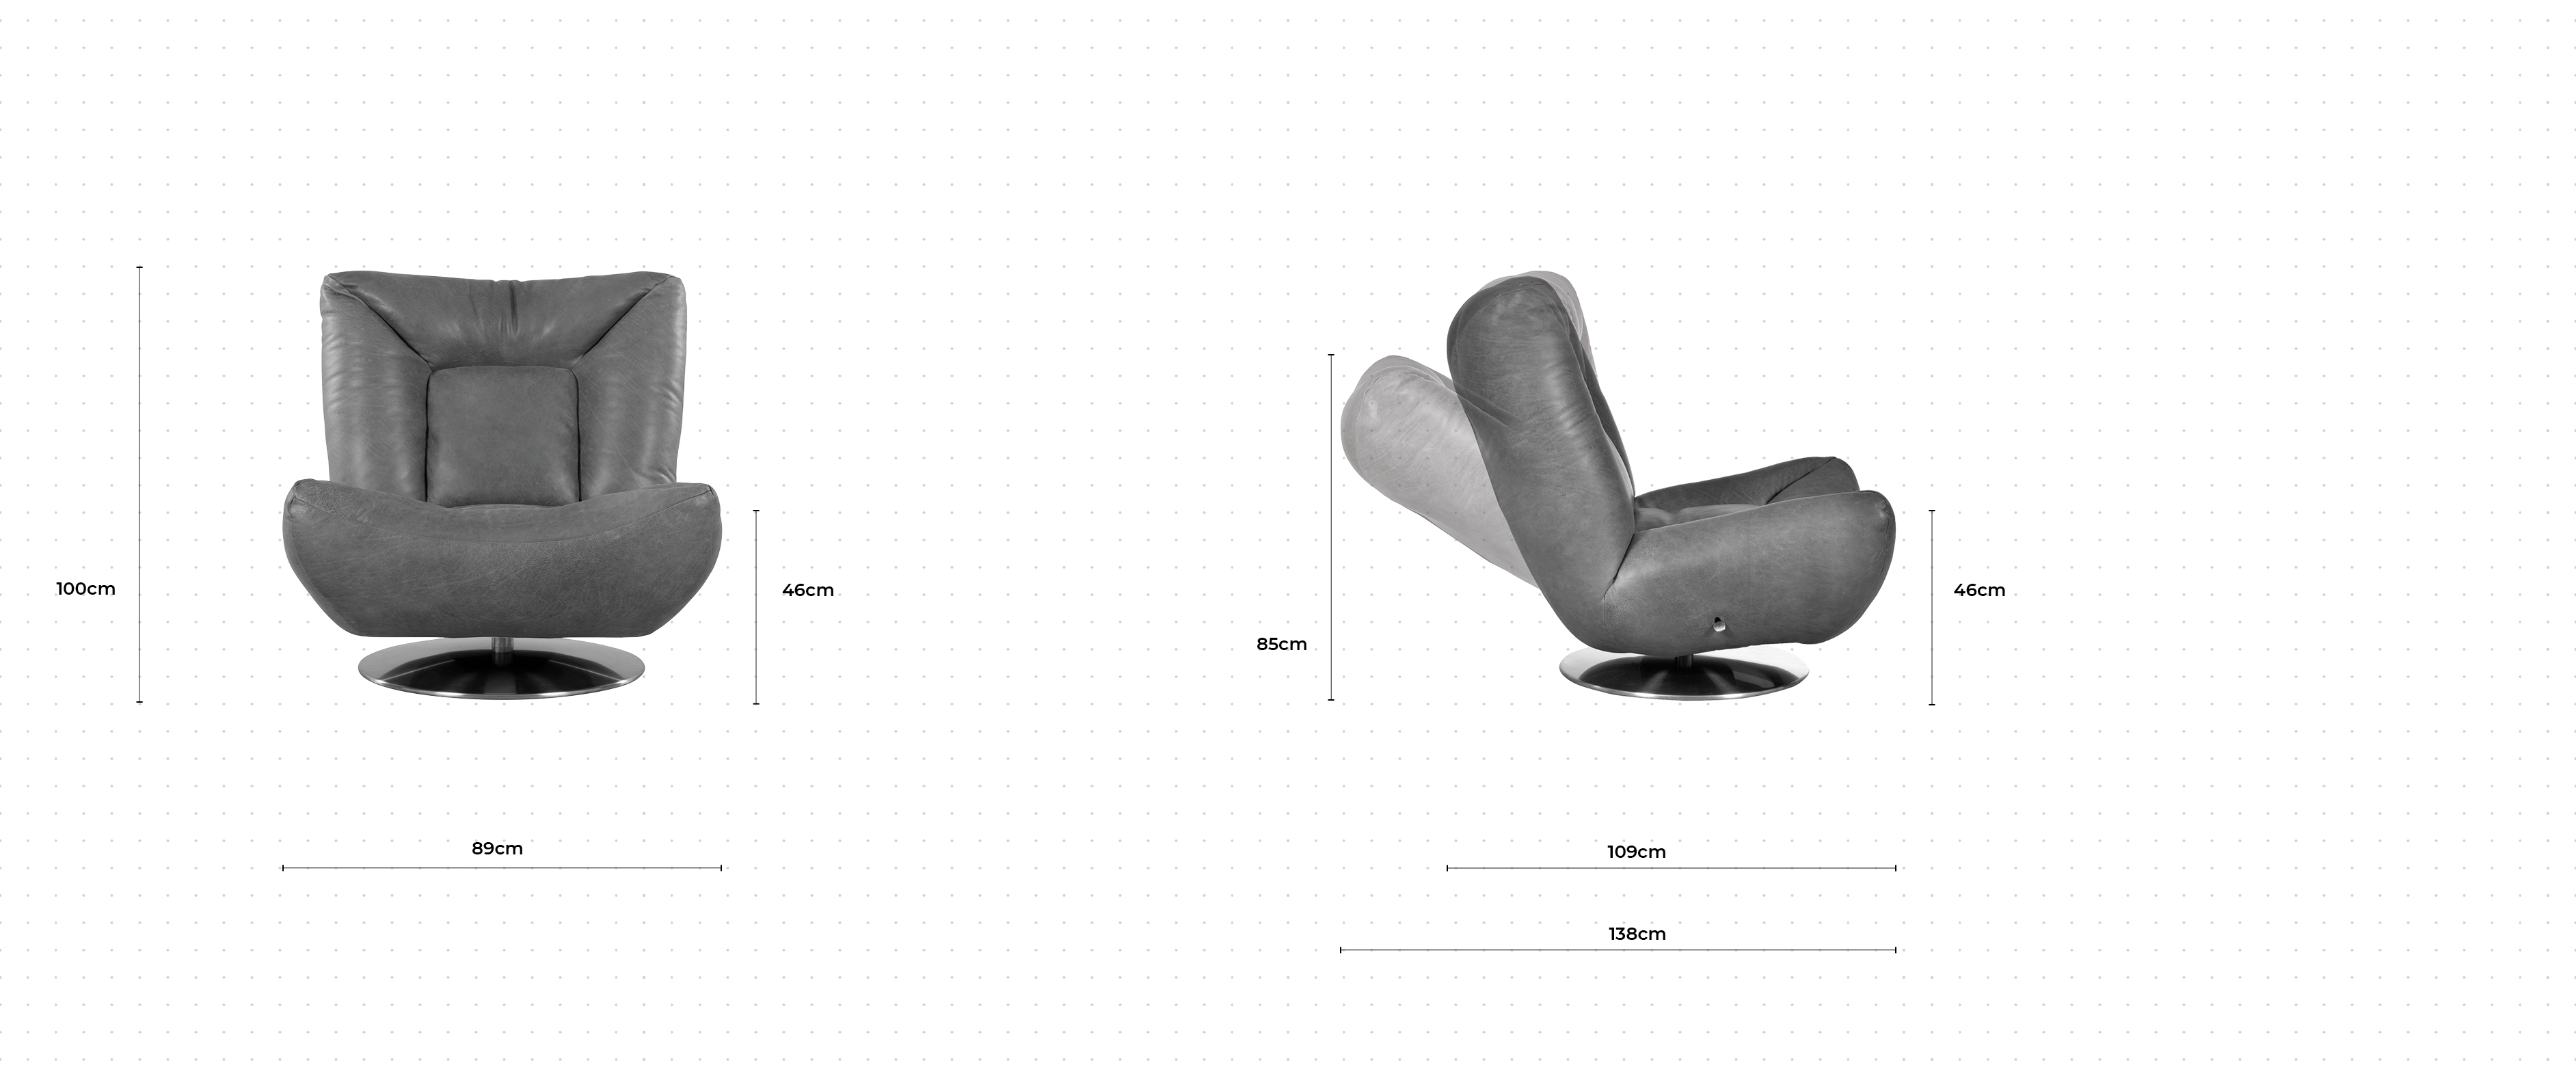 Abrams Swivel Chair dimensions